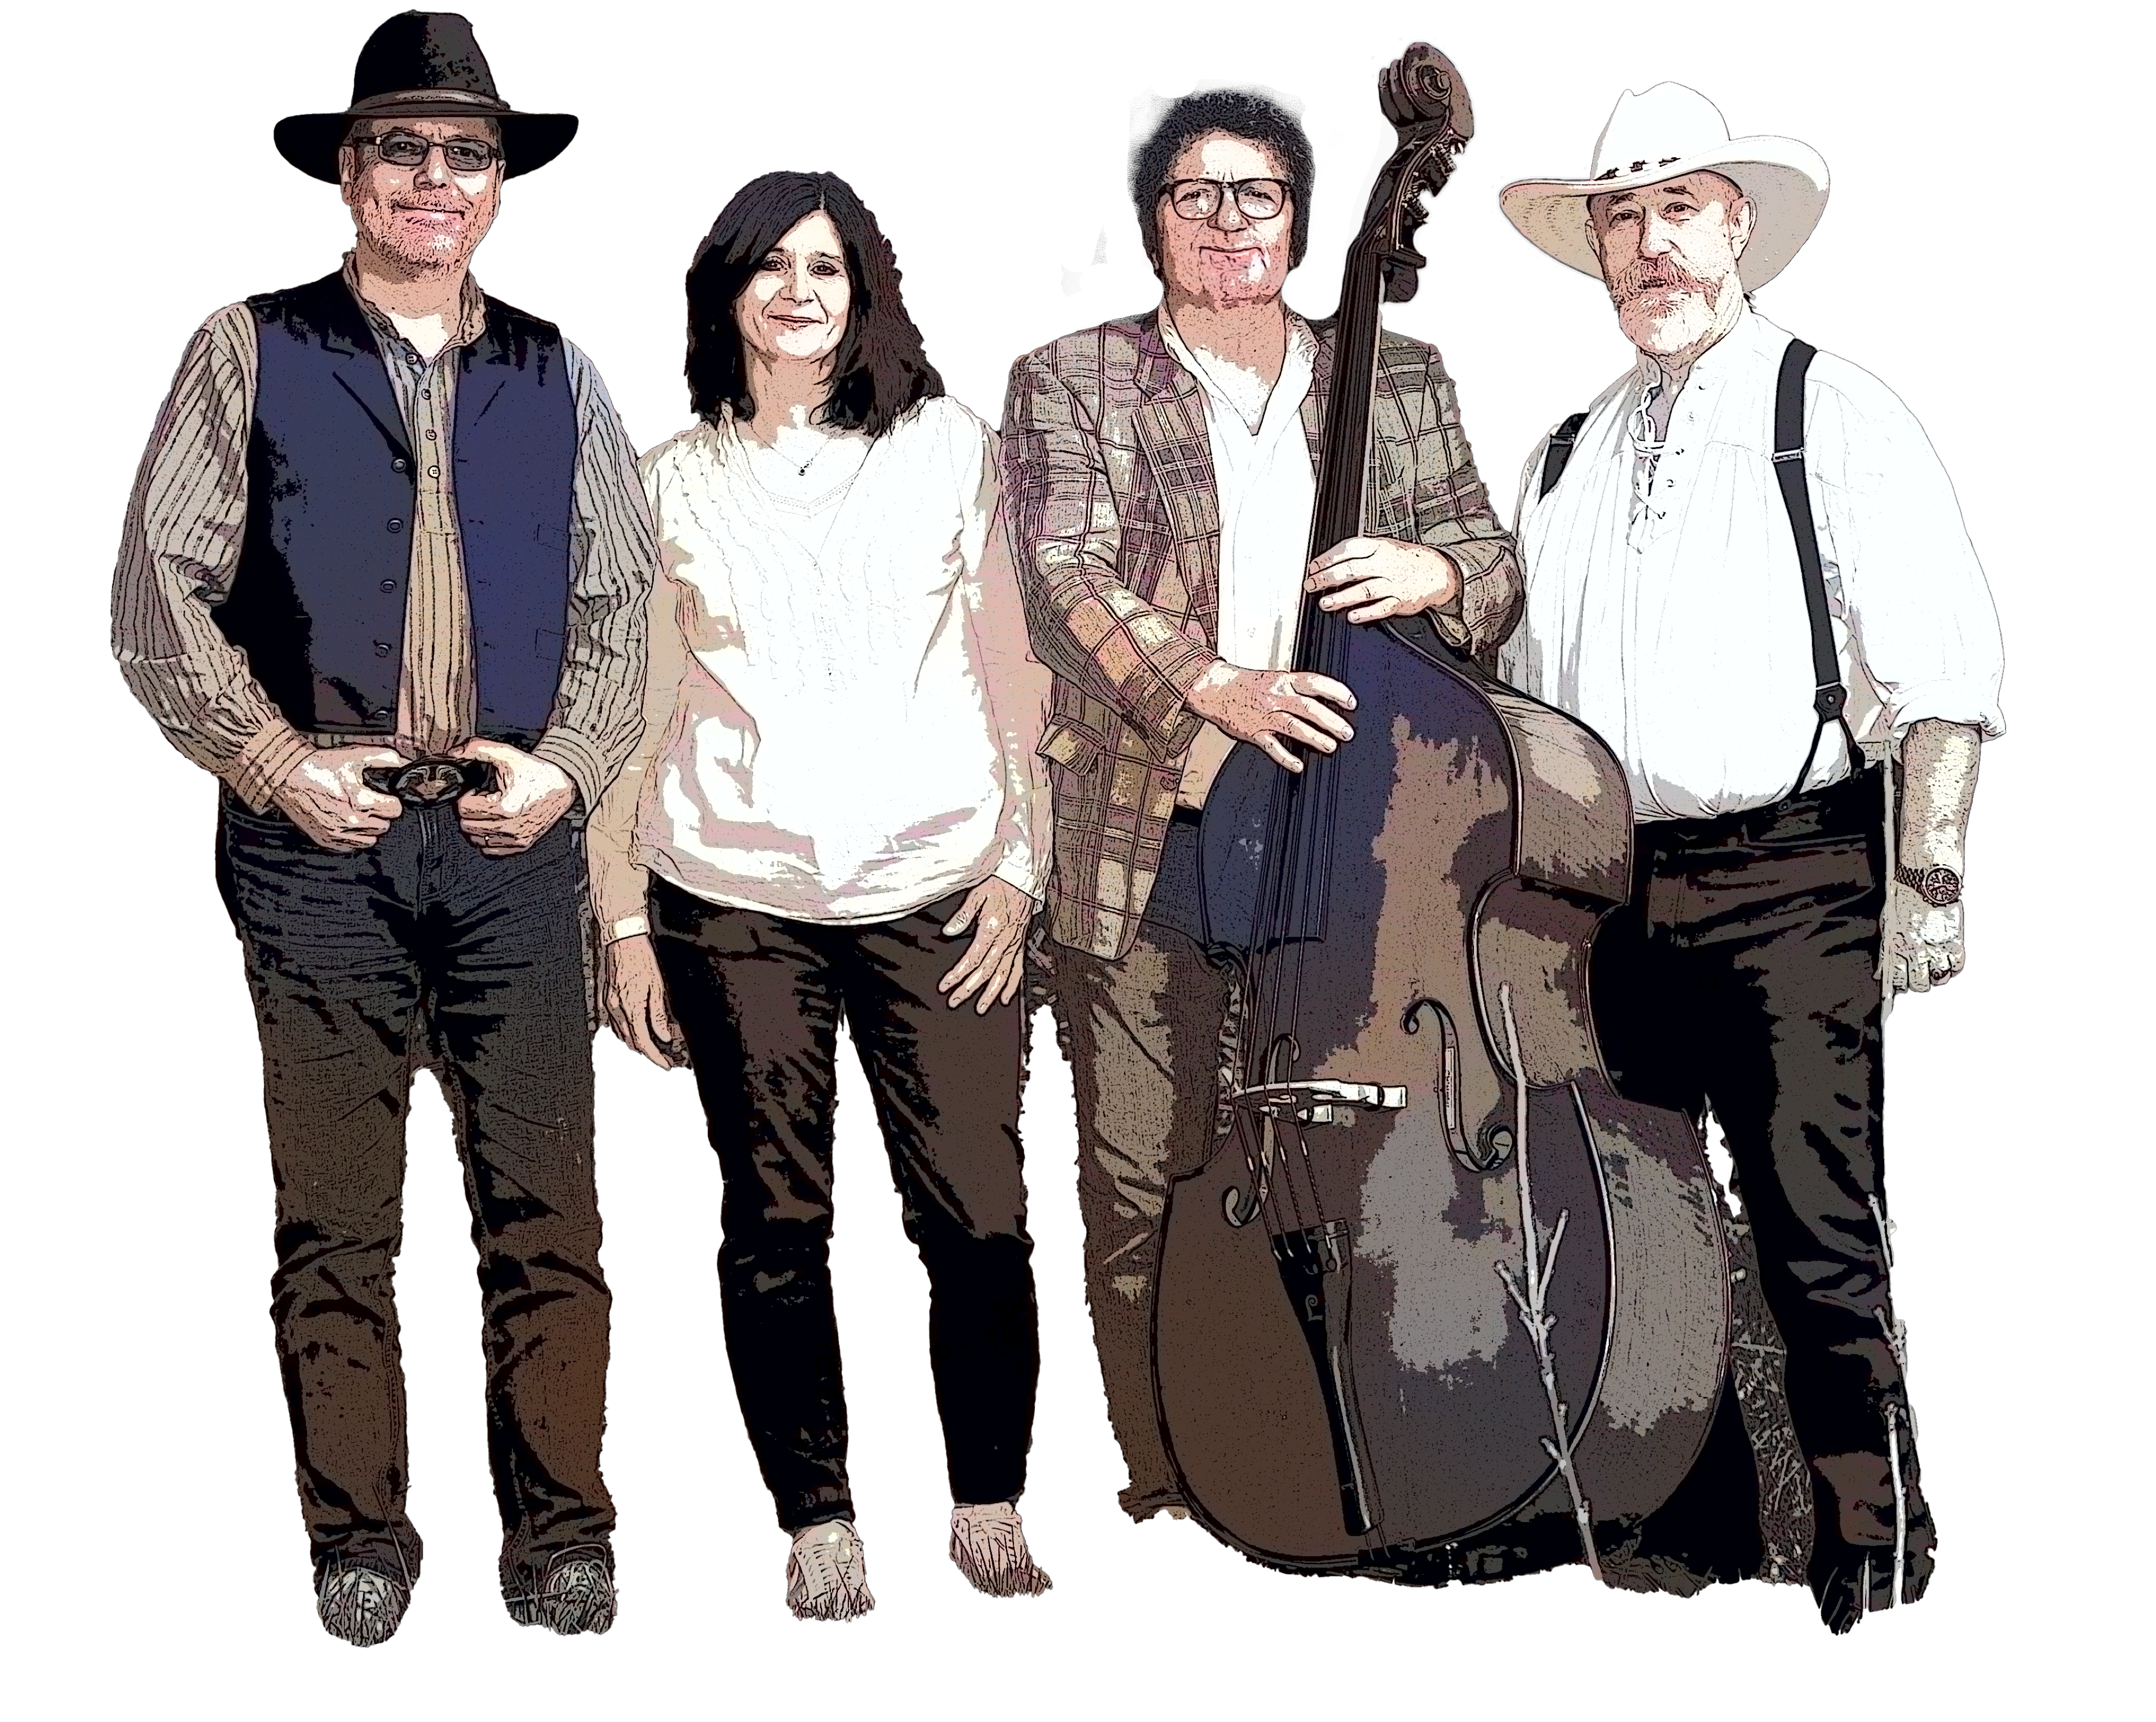 Die Band von links nach rechts: Rüdiger Horne (Banjo, Mandoline, Gesang); Claudia Nell (Fiddle); Thomas Schilling (Kontrabass); Gérard Moeres (Gitarre, Gesang)